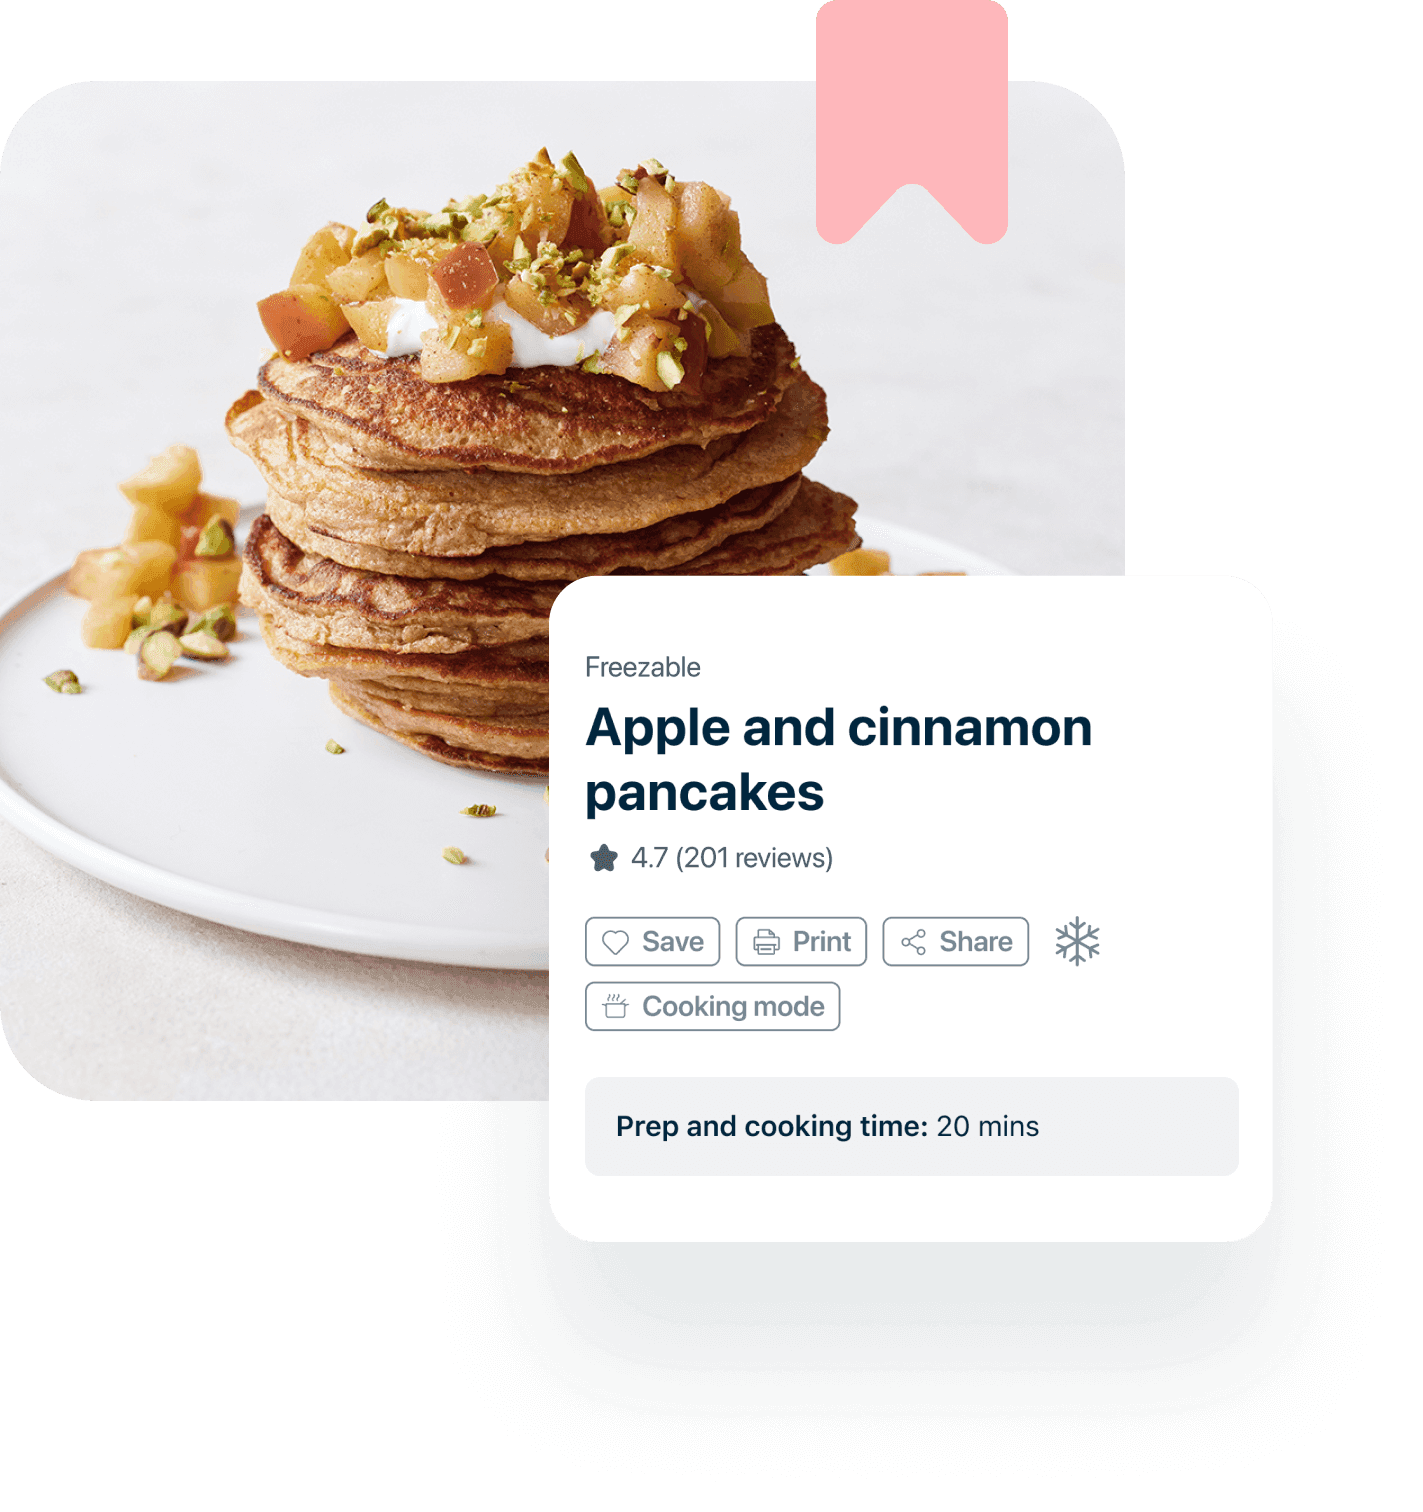 Apple and cinnamon pancakes